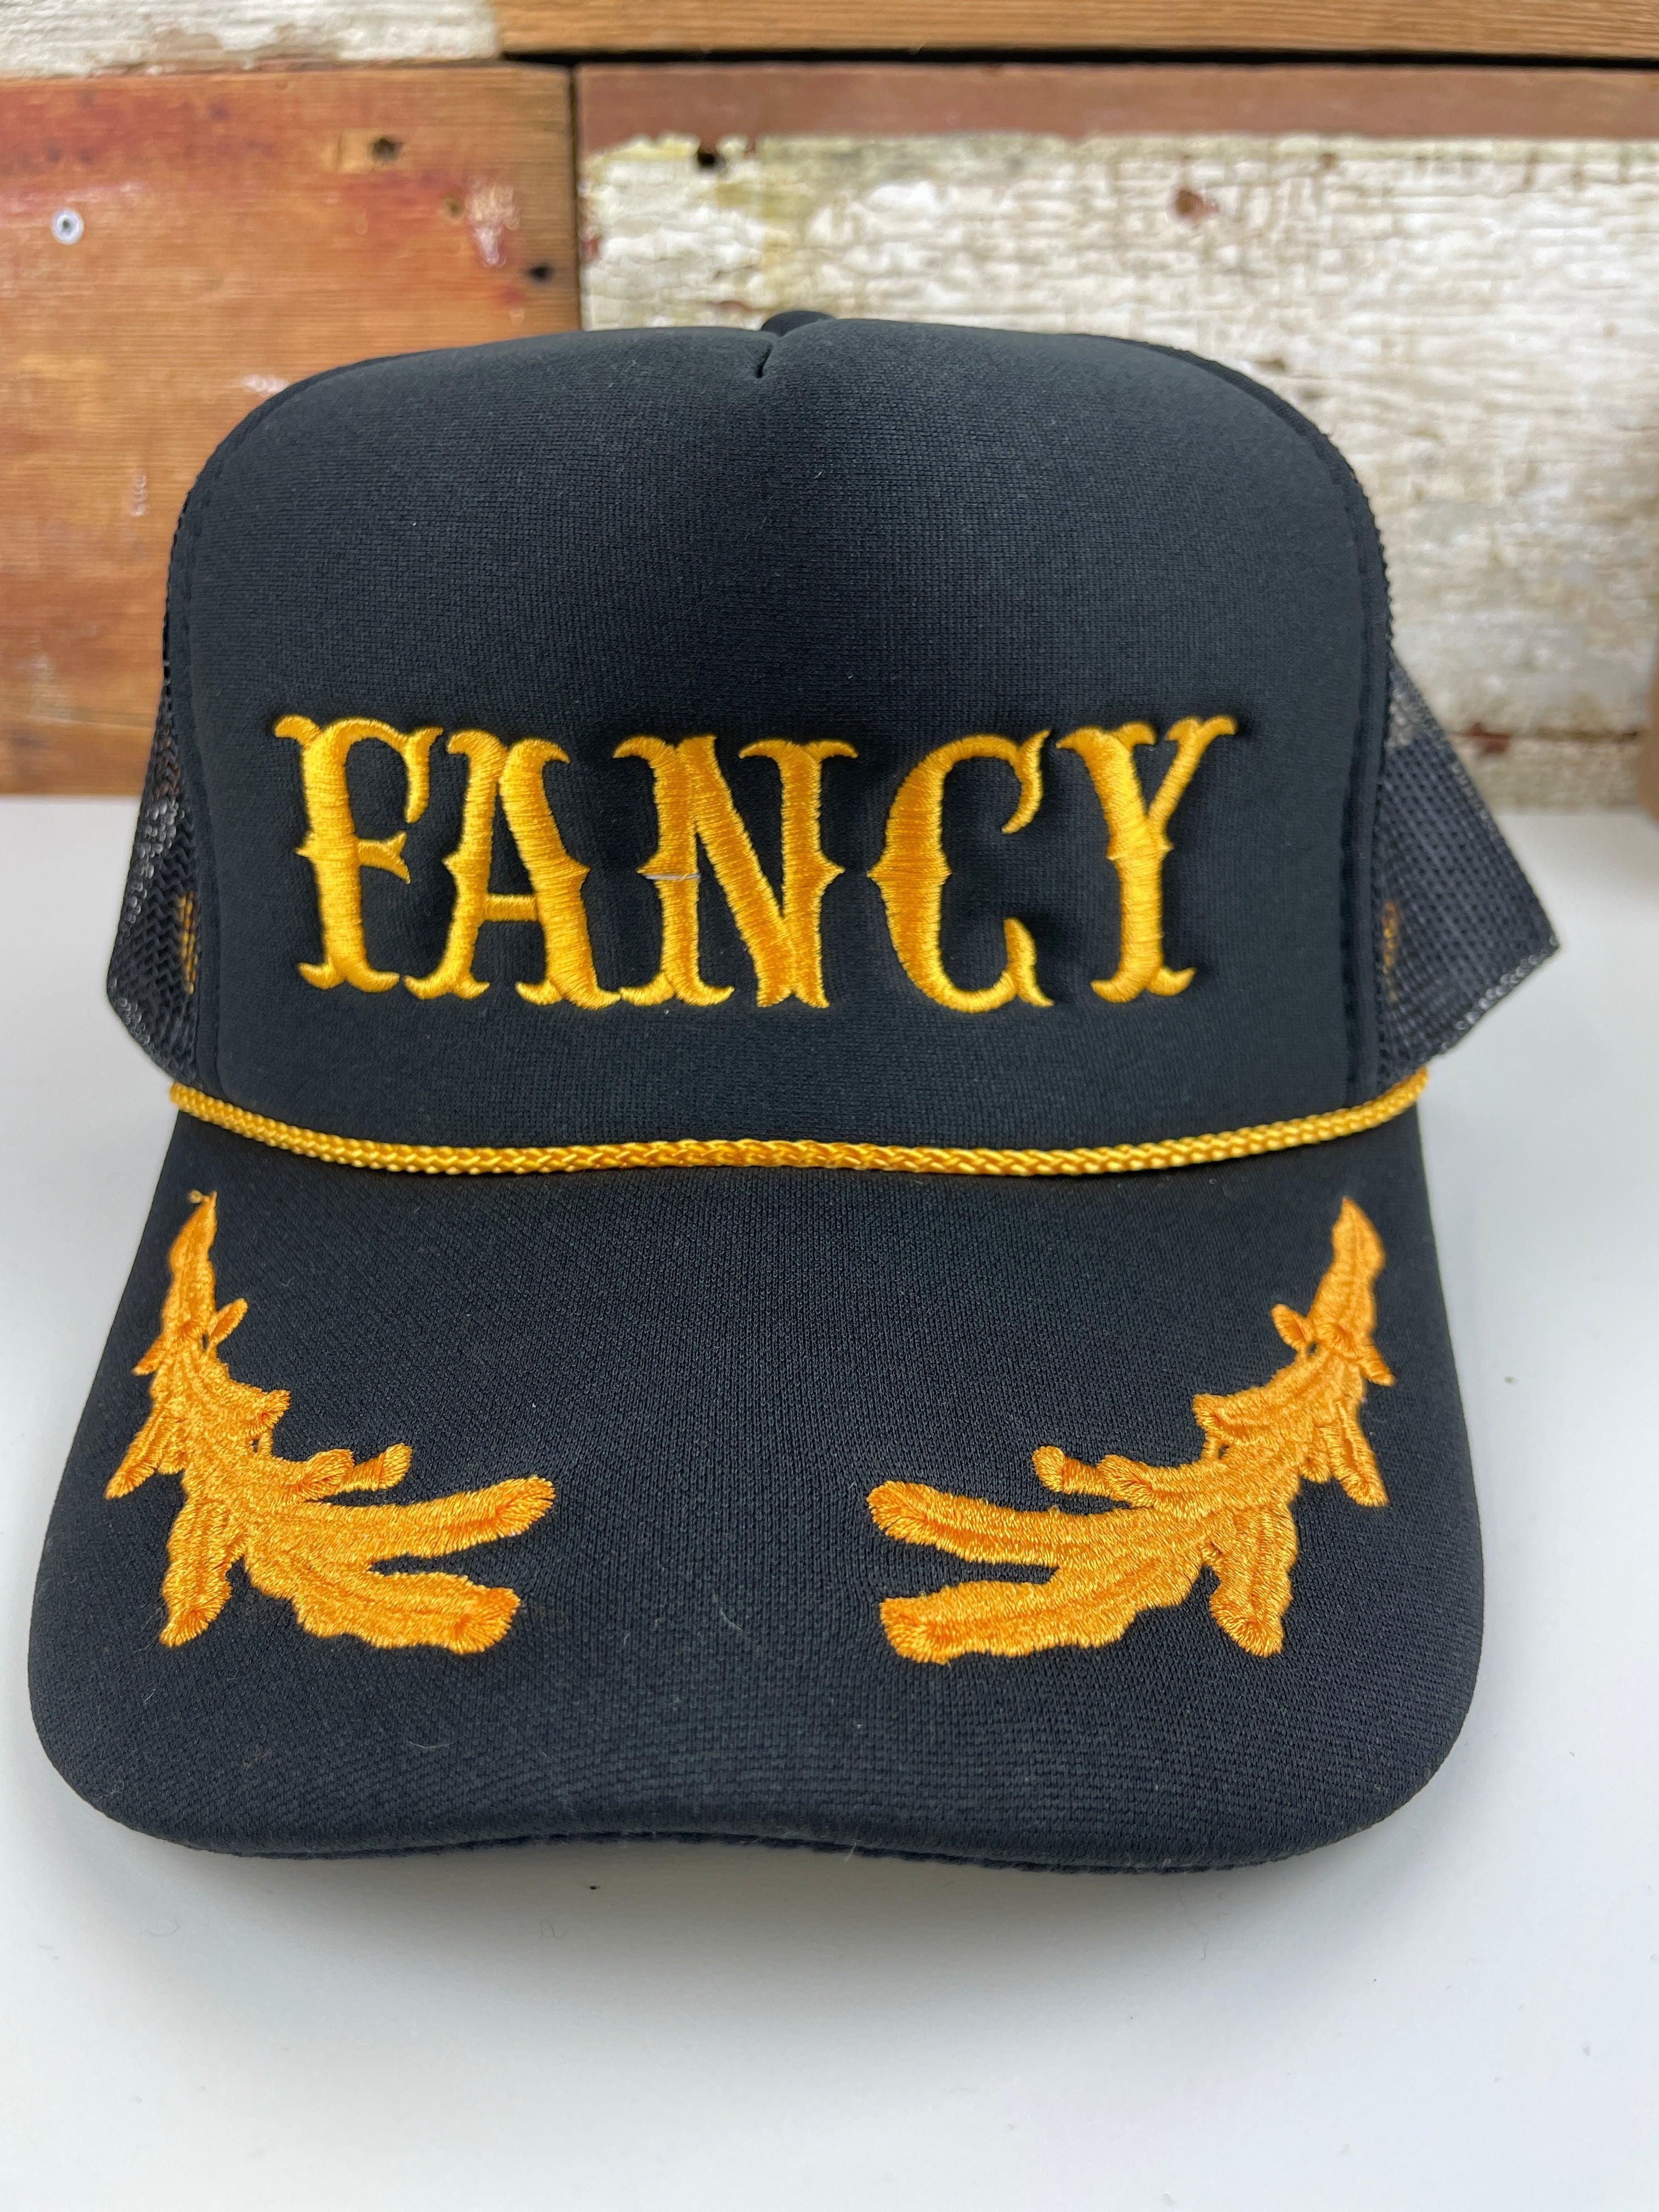 Fancy Was Her Name - Vintage Soul